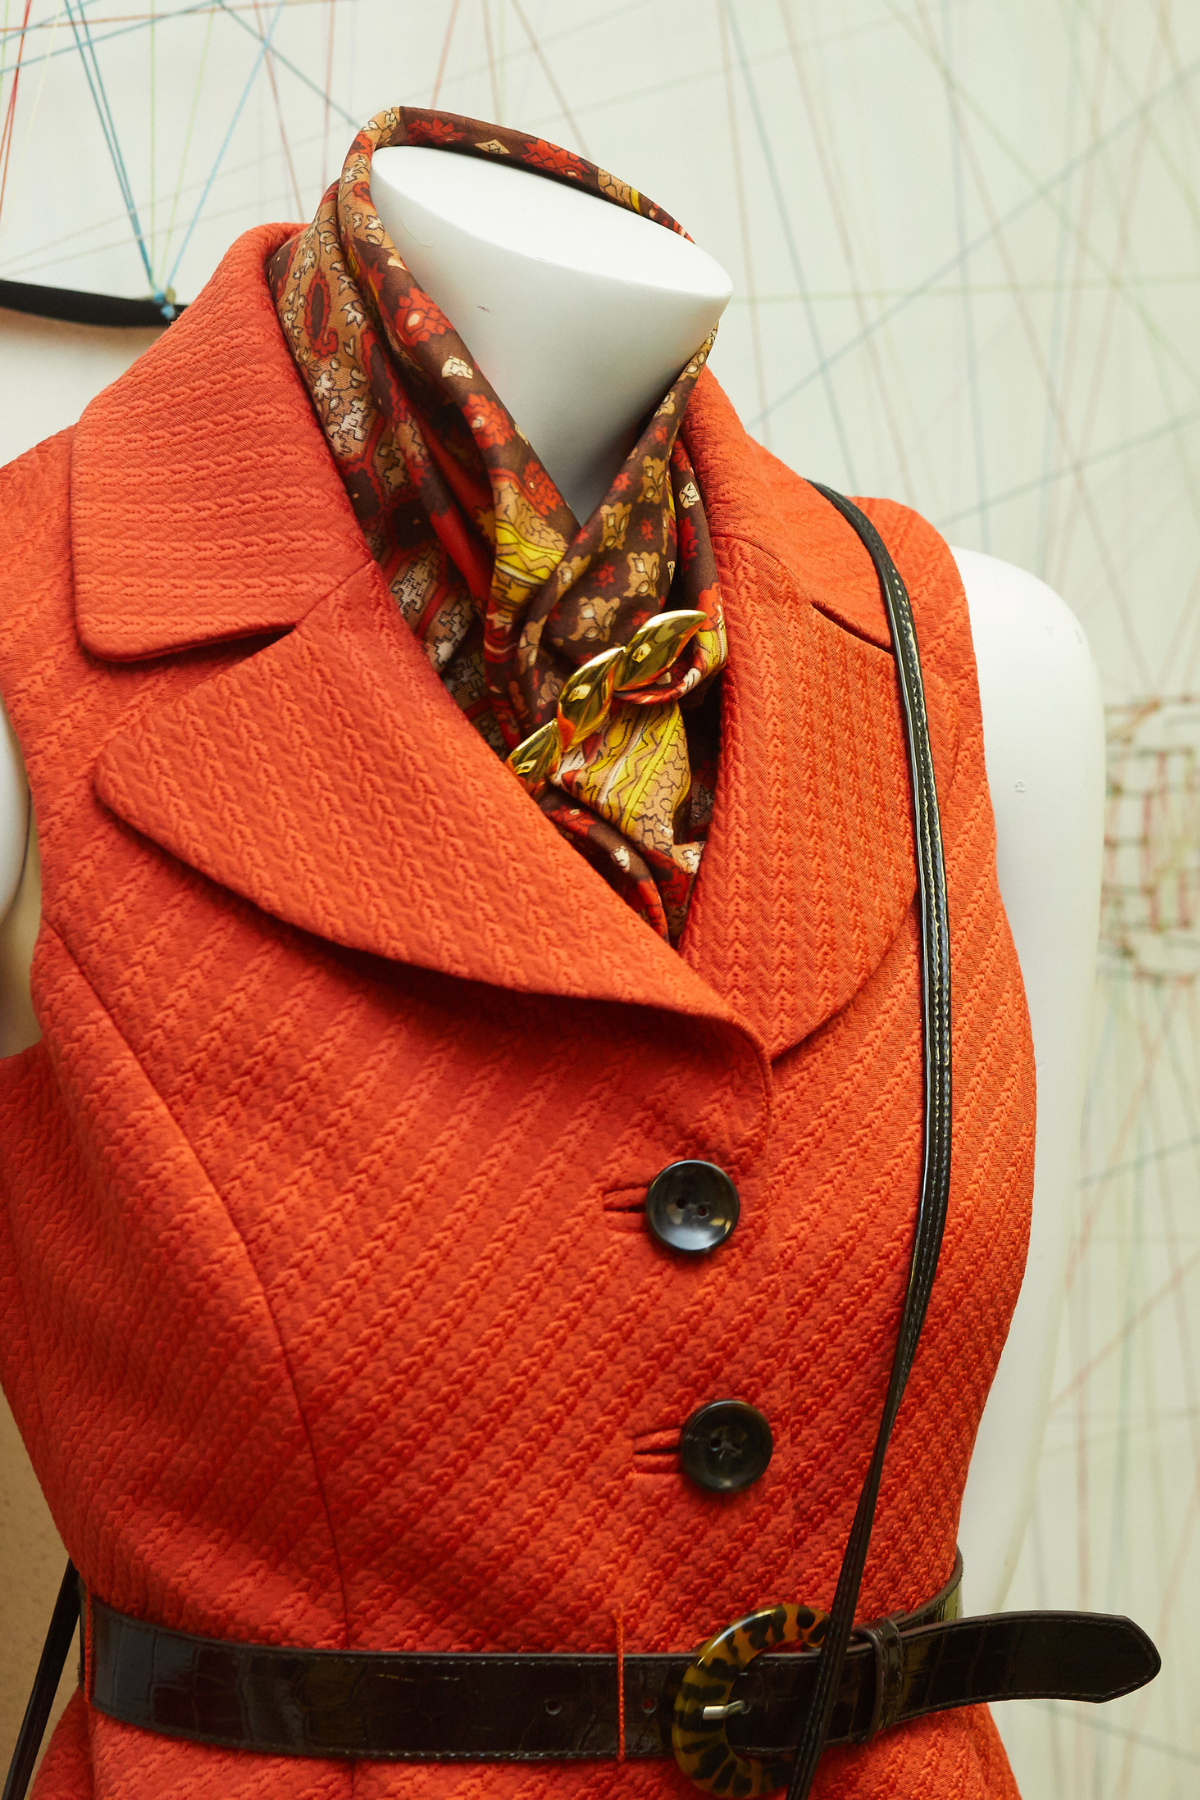 mannequin with an orange vest and orange neck scarf